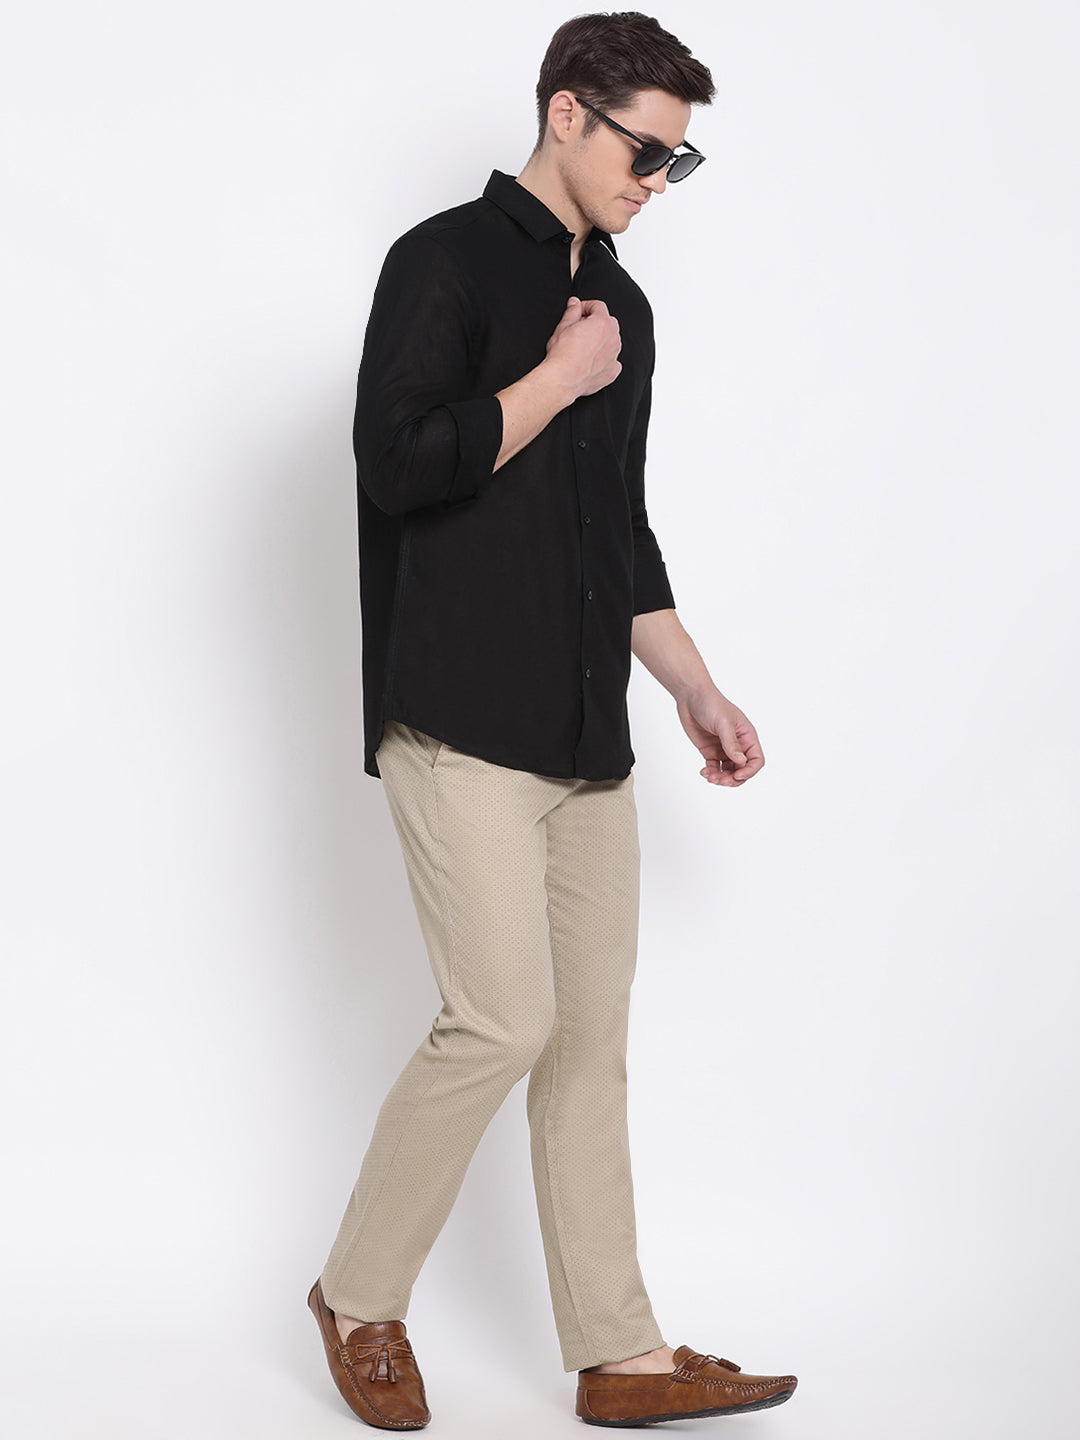 Black Linen Solid Slim Fit Shirts